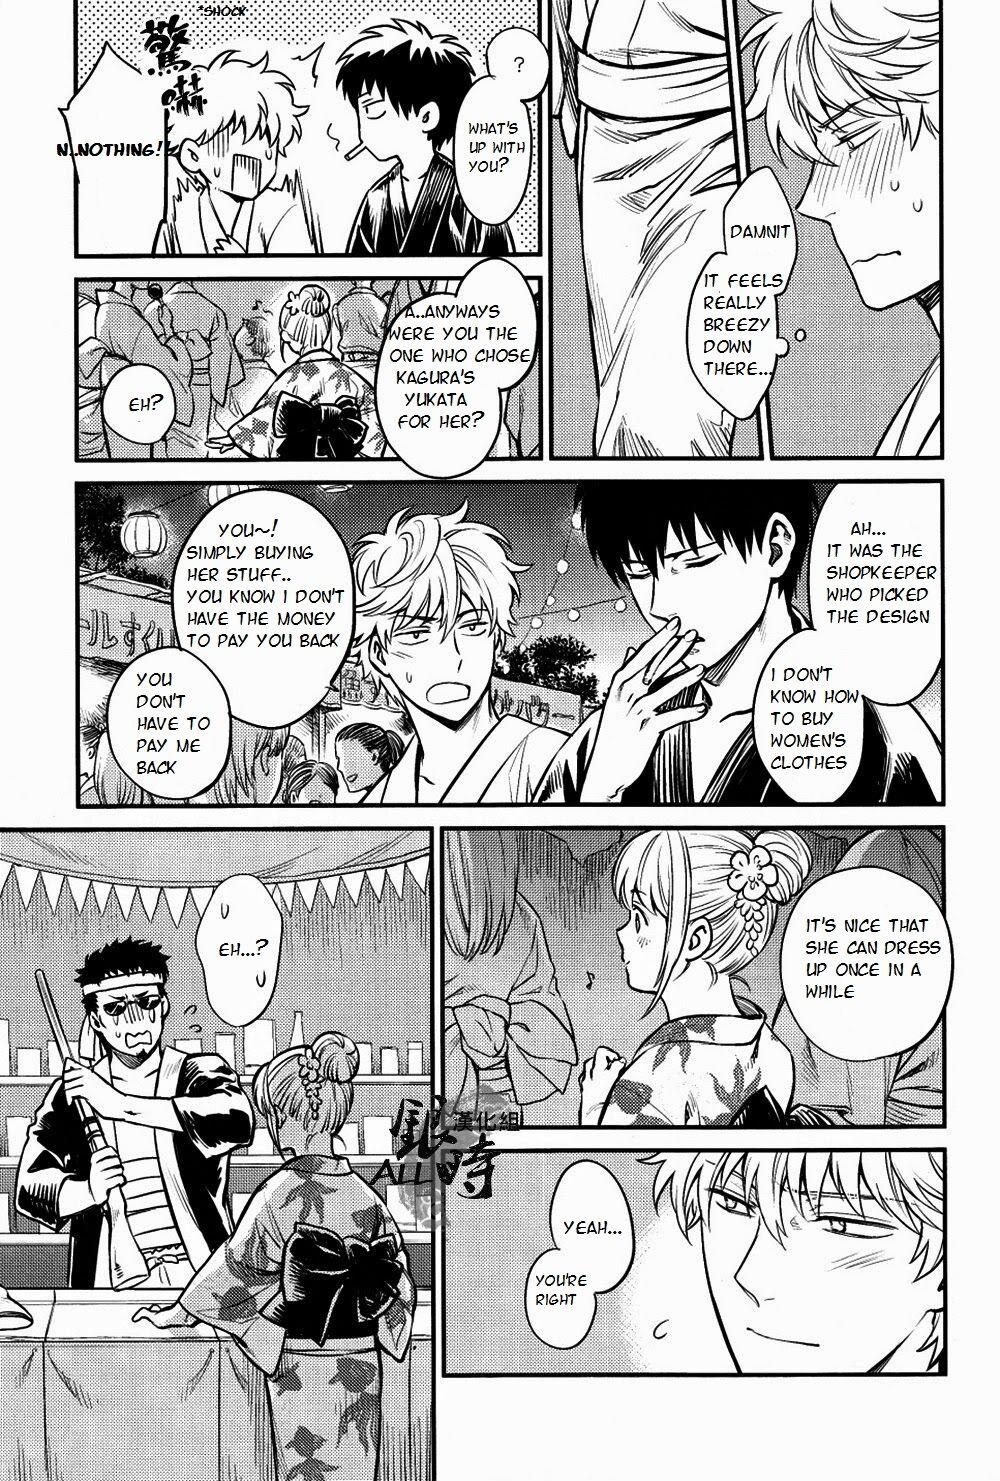 Groupsex Please! Gintoki - Gintama Student - Page 10